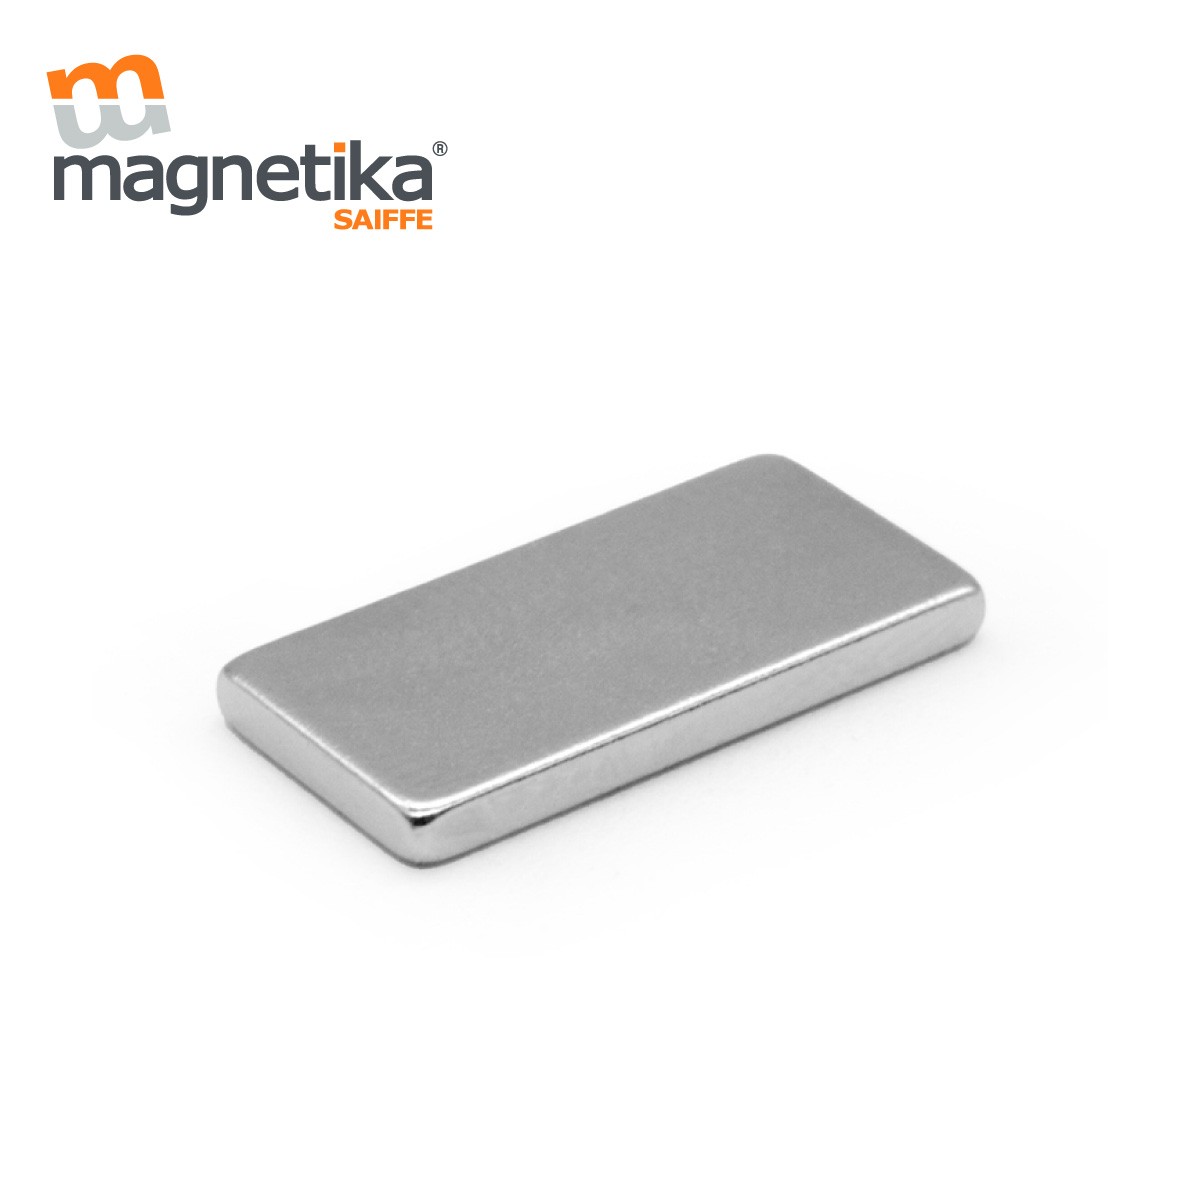 Aimant frigo 20x10x2mm Block Magnets Rare Earth Neodymium Iman Neodimio  imanes de neodimio pizarra blanca magnet diy